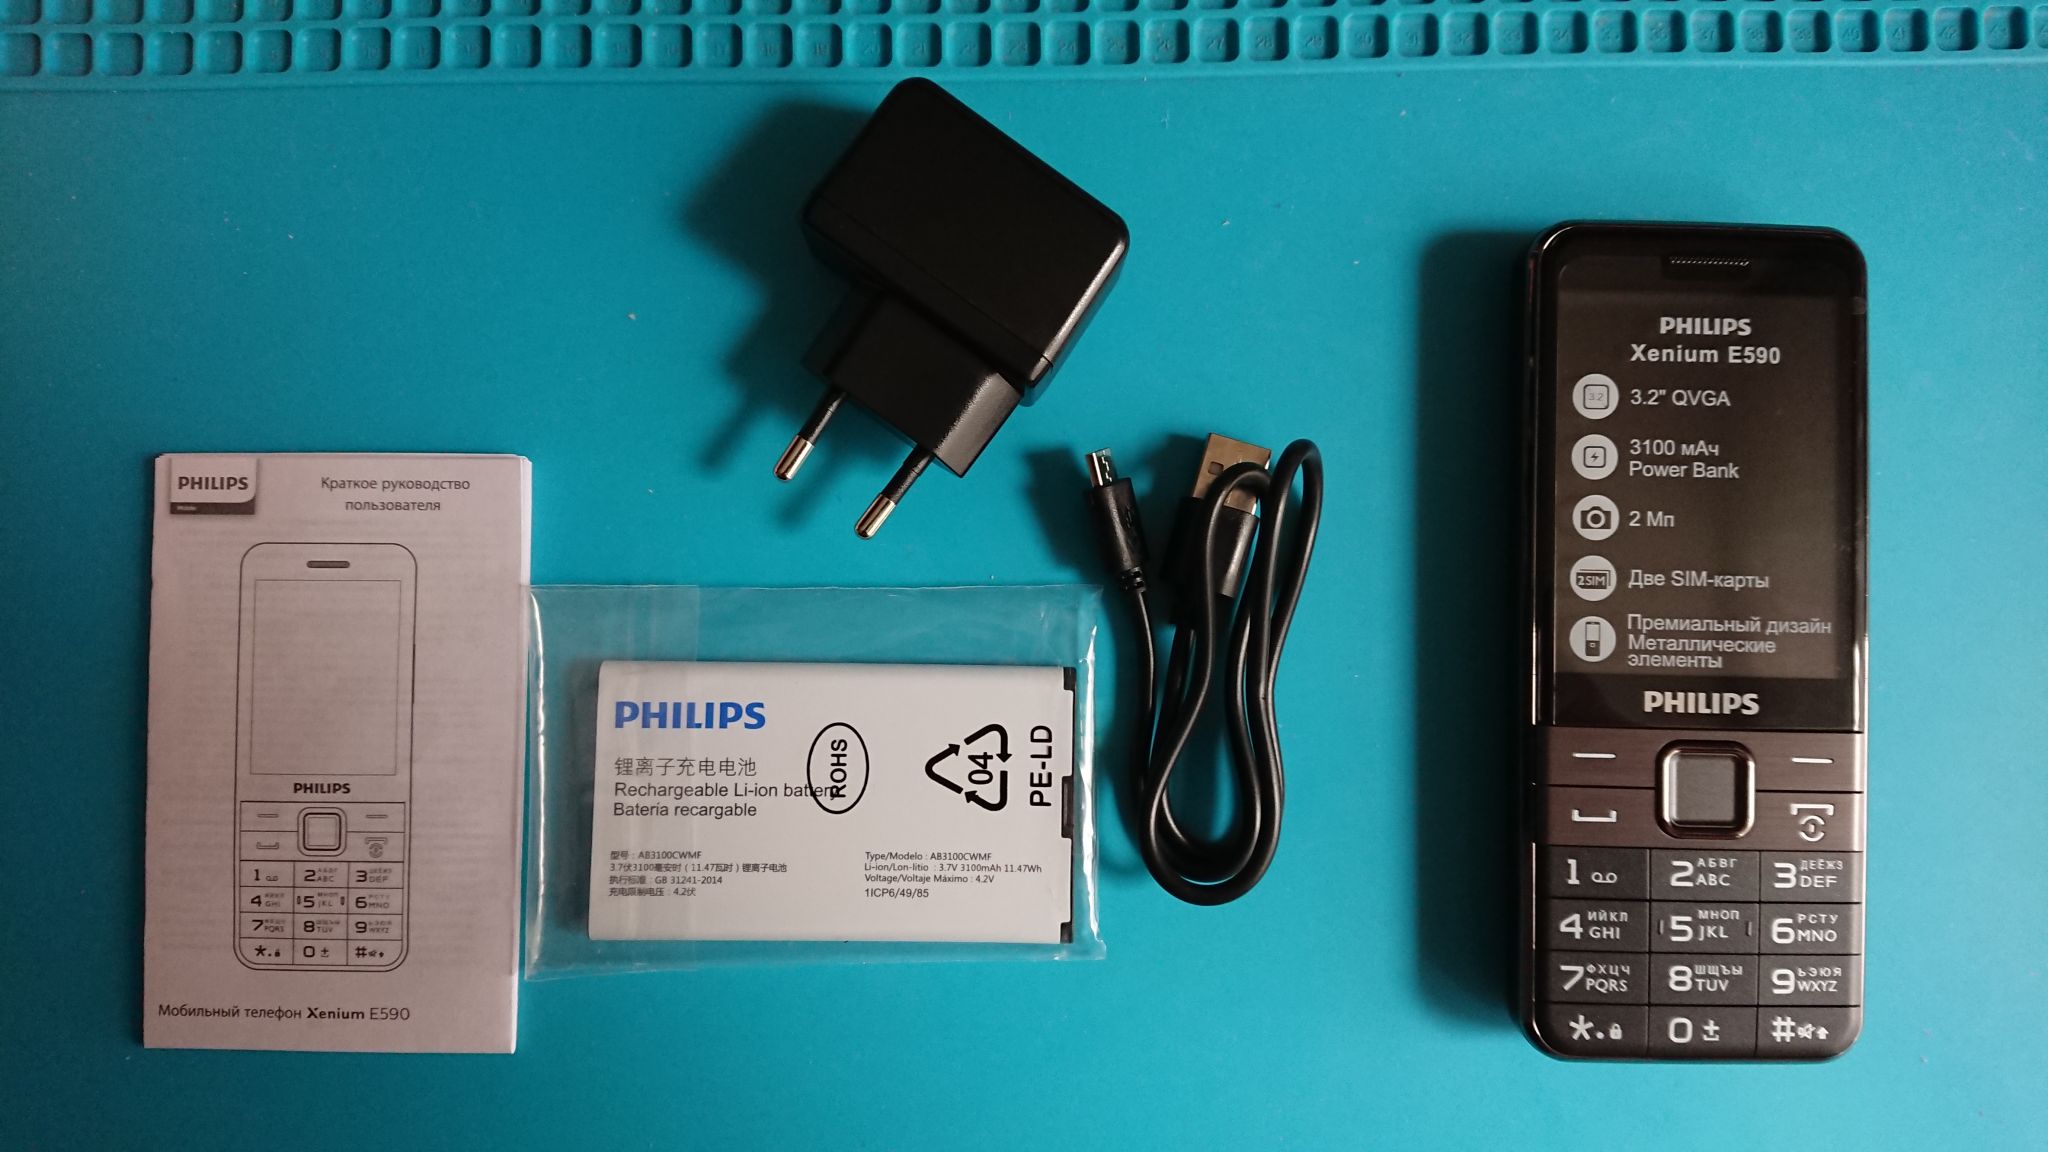 Xenium e590 black. Philips e590 Xenium Black. Мобильный телефон Philips Xenium e590. Philips Xenium e570. Philips Xenium 590.